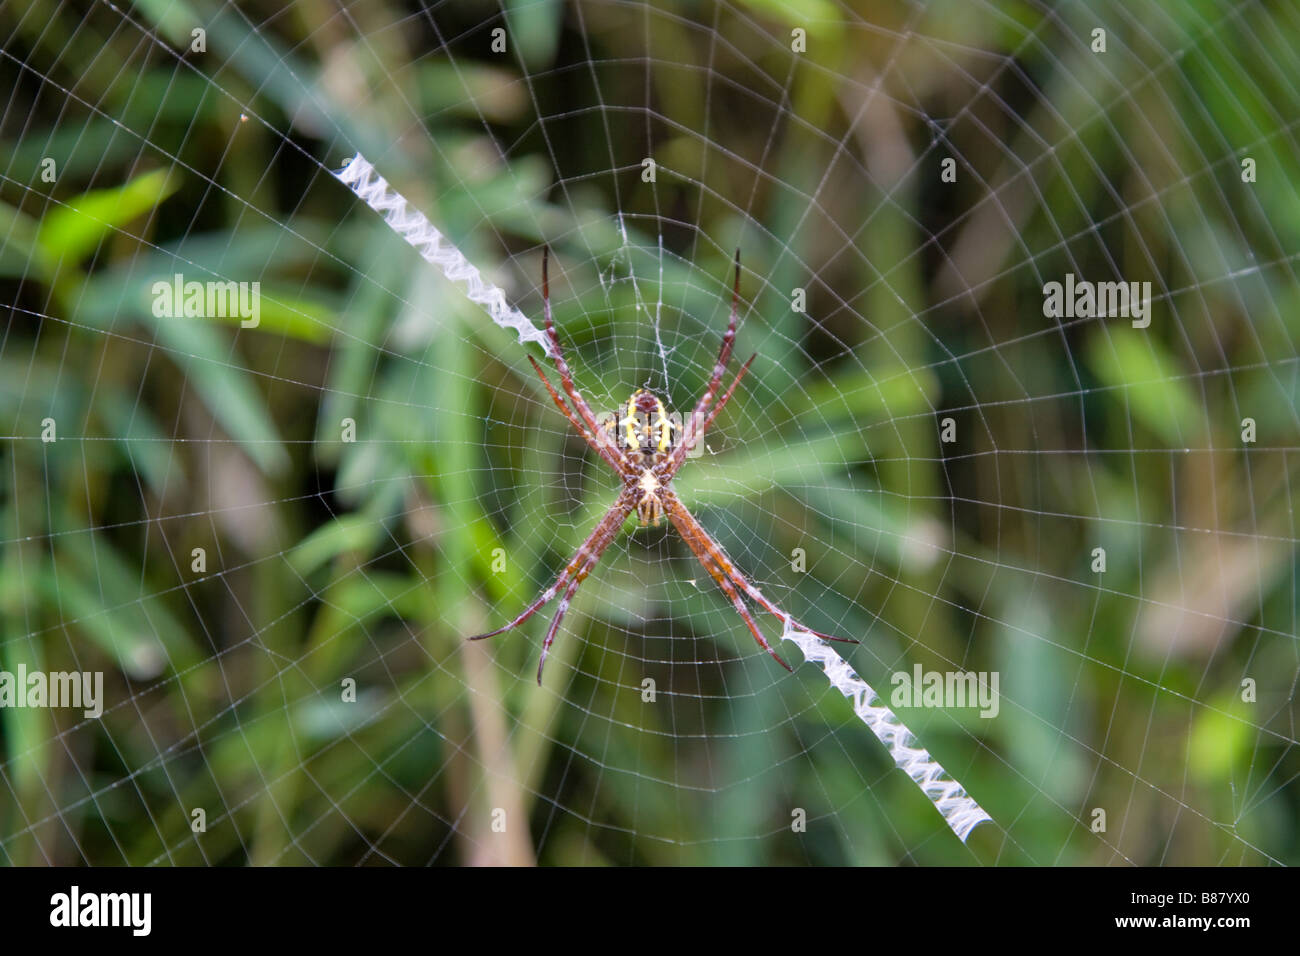 Mature female argiope appensa spider at the centre of a web Stock Photo